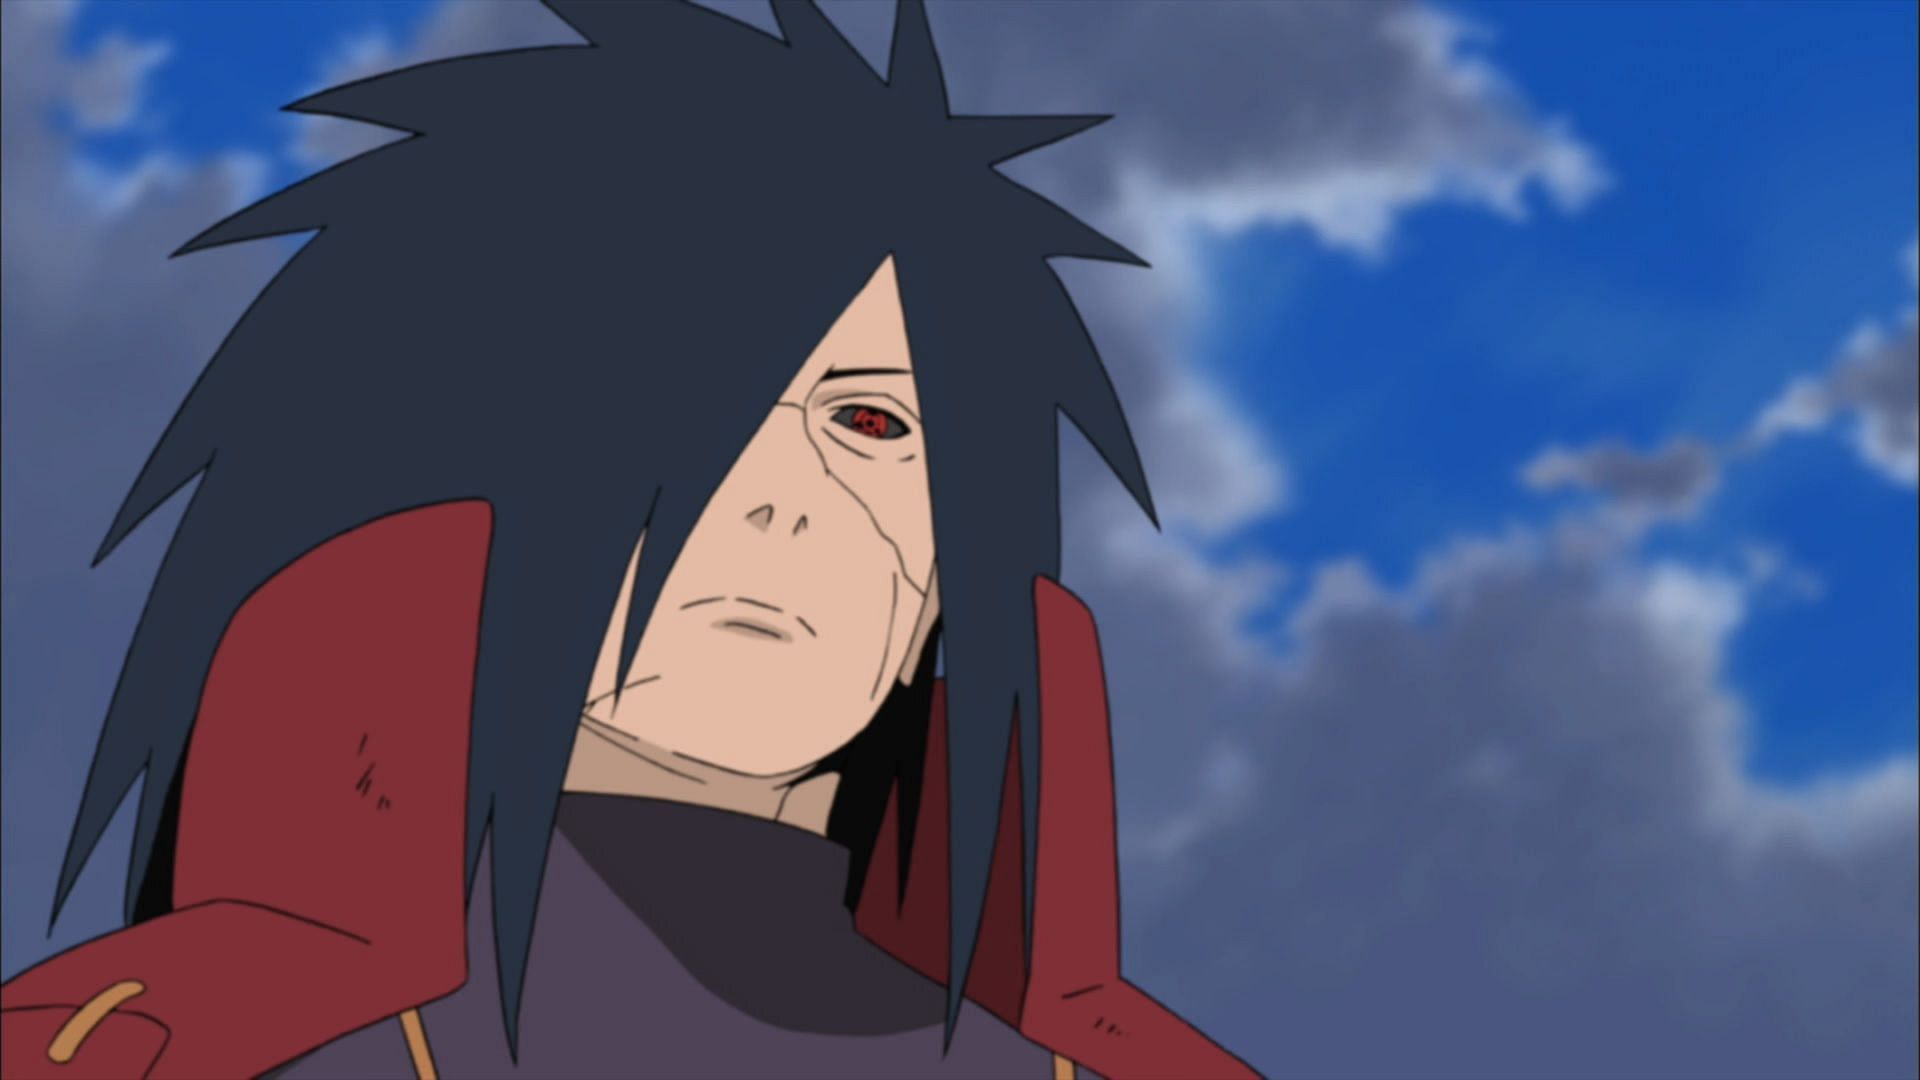 Madara Uchiha as seen in the Naruto: Shippuden anime (Image via Studio Pierrot)